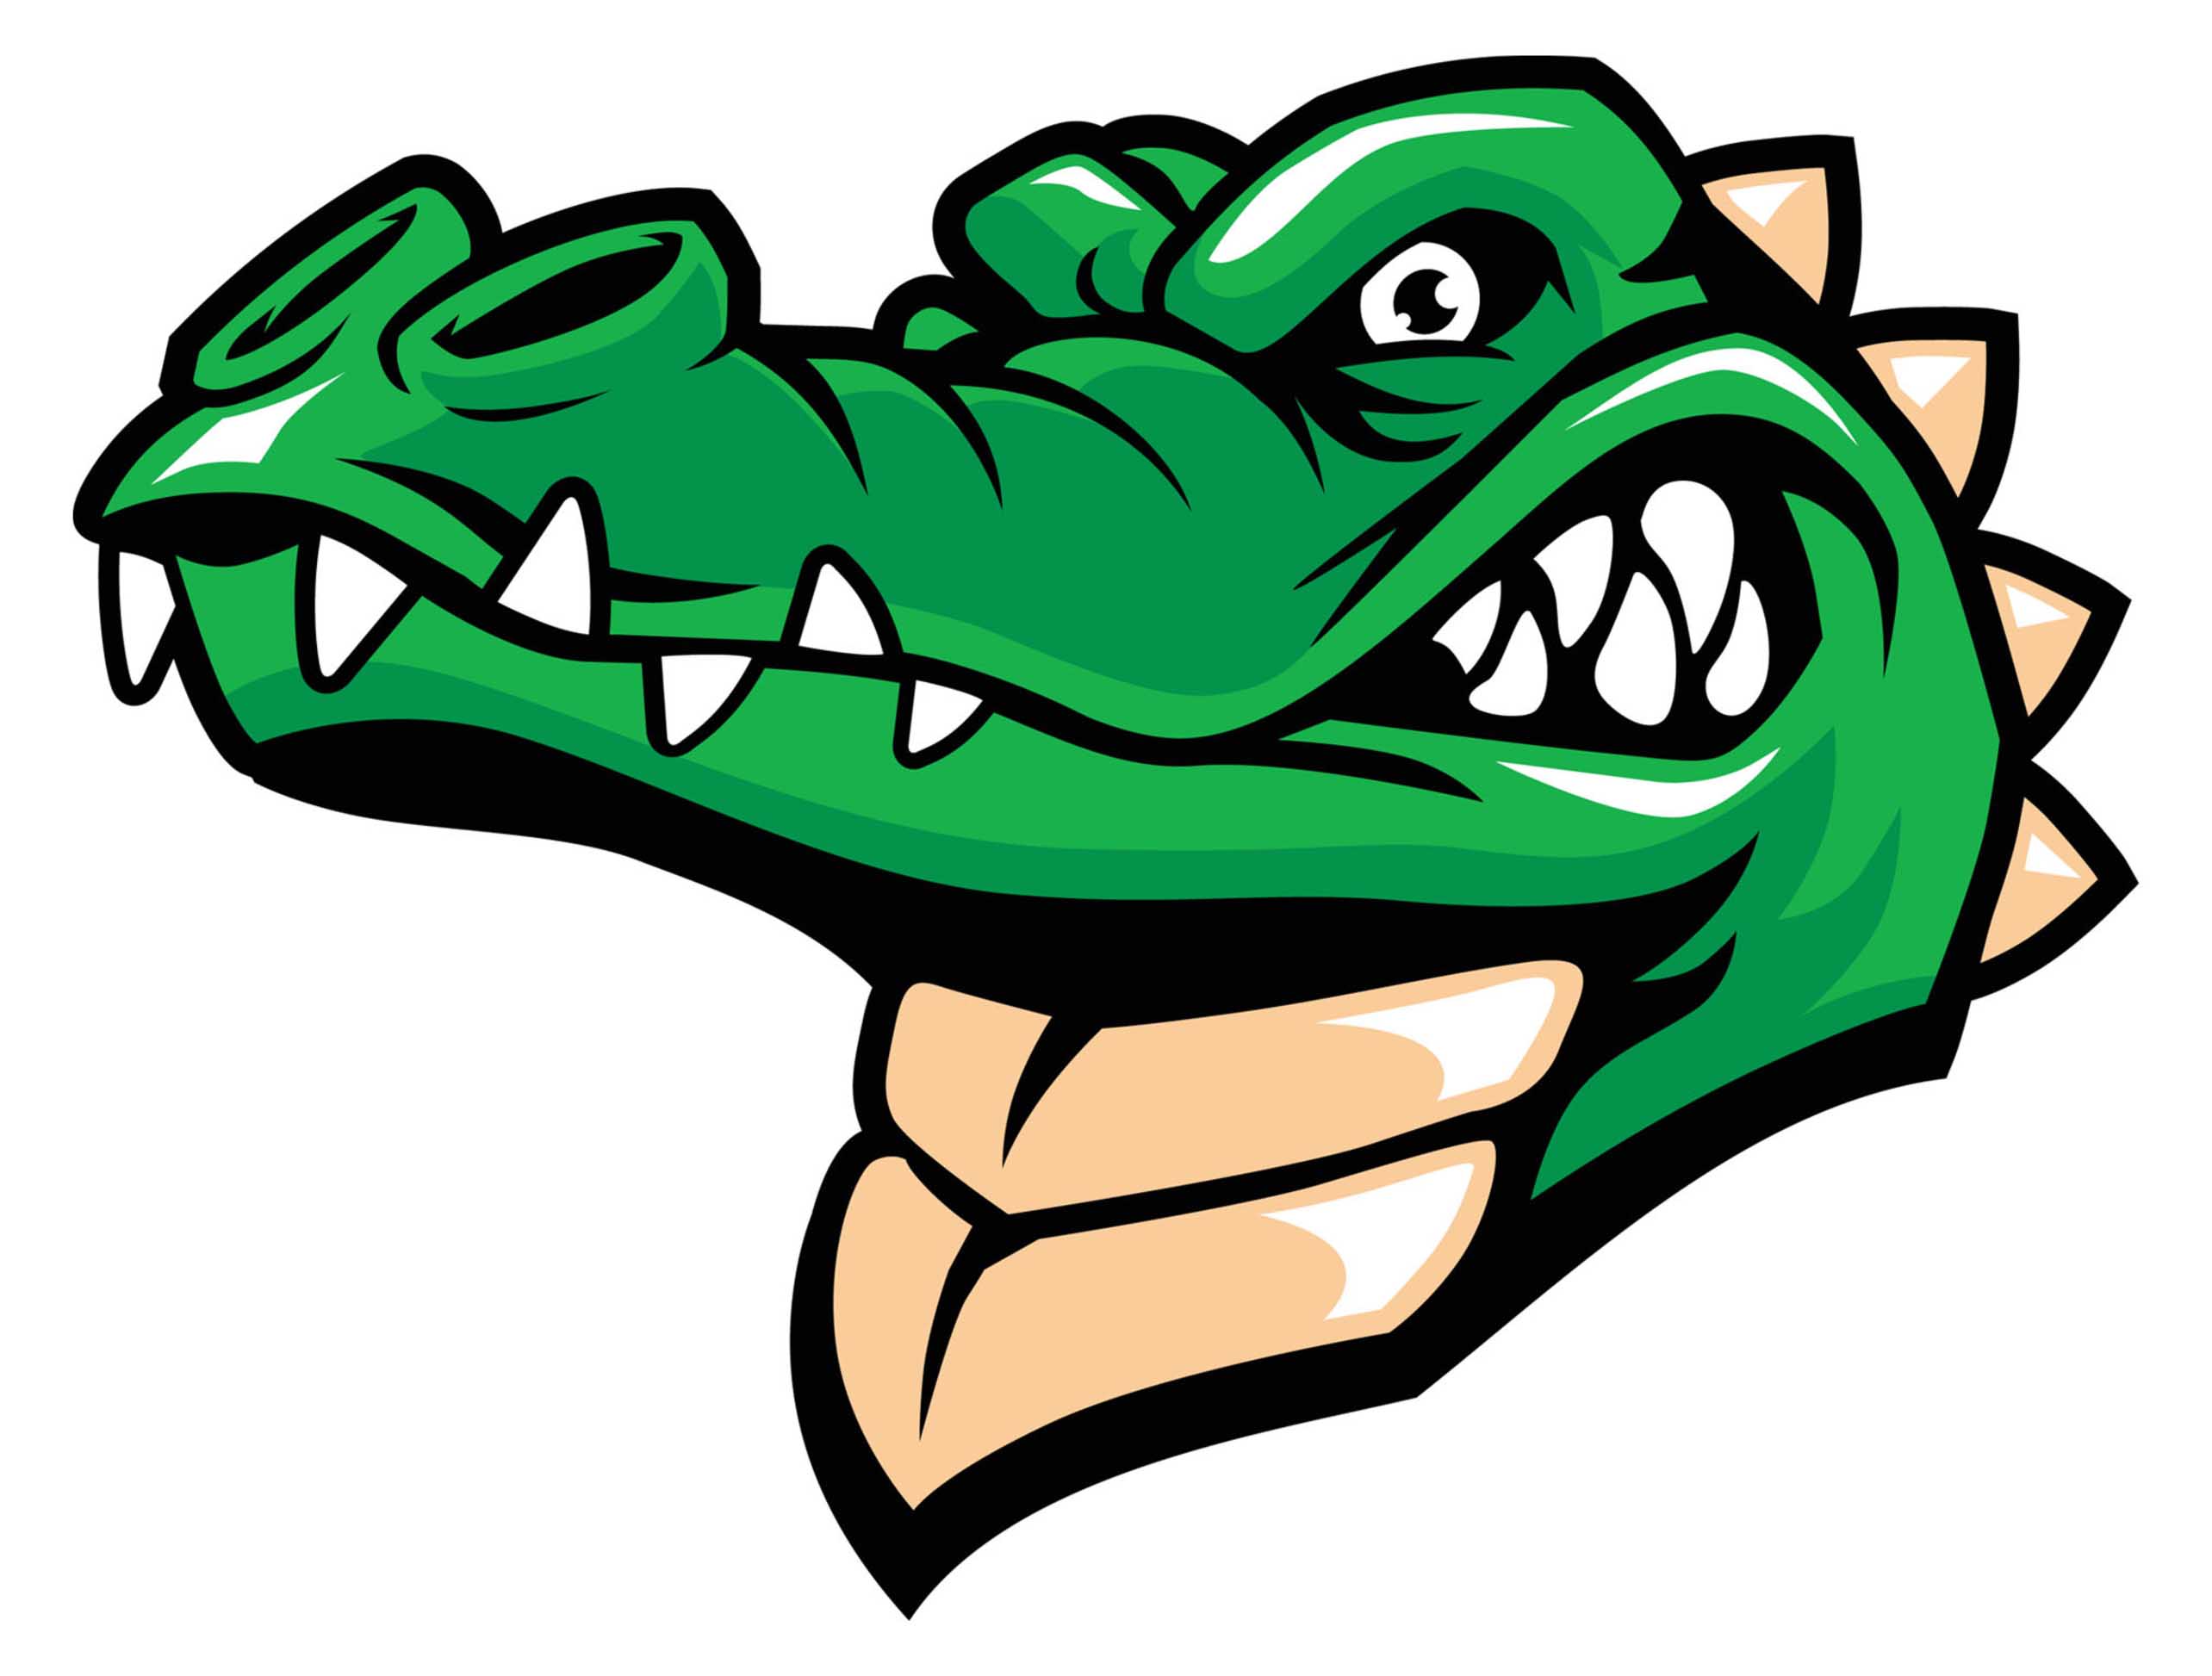 Green alligator Logos